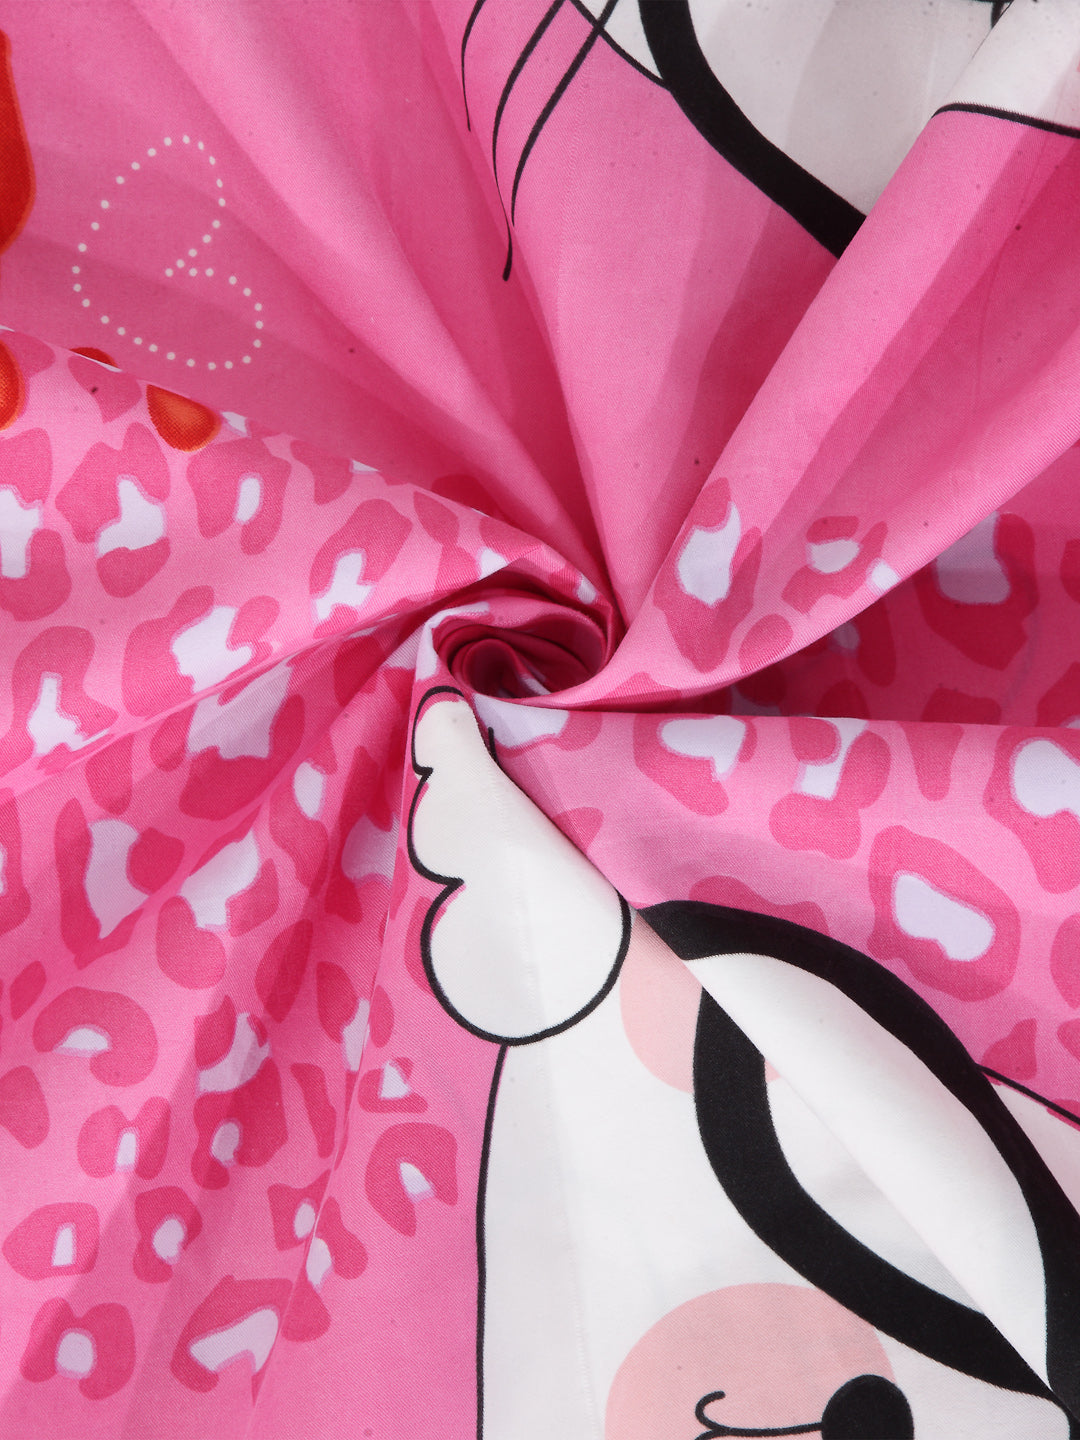 Arrabi Pink Cartoon TC Cotton Blend King Size Bookfold Bedsheet with 2 Pillow Covers (250 X 220 cm)